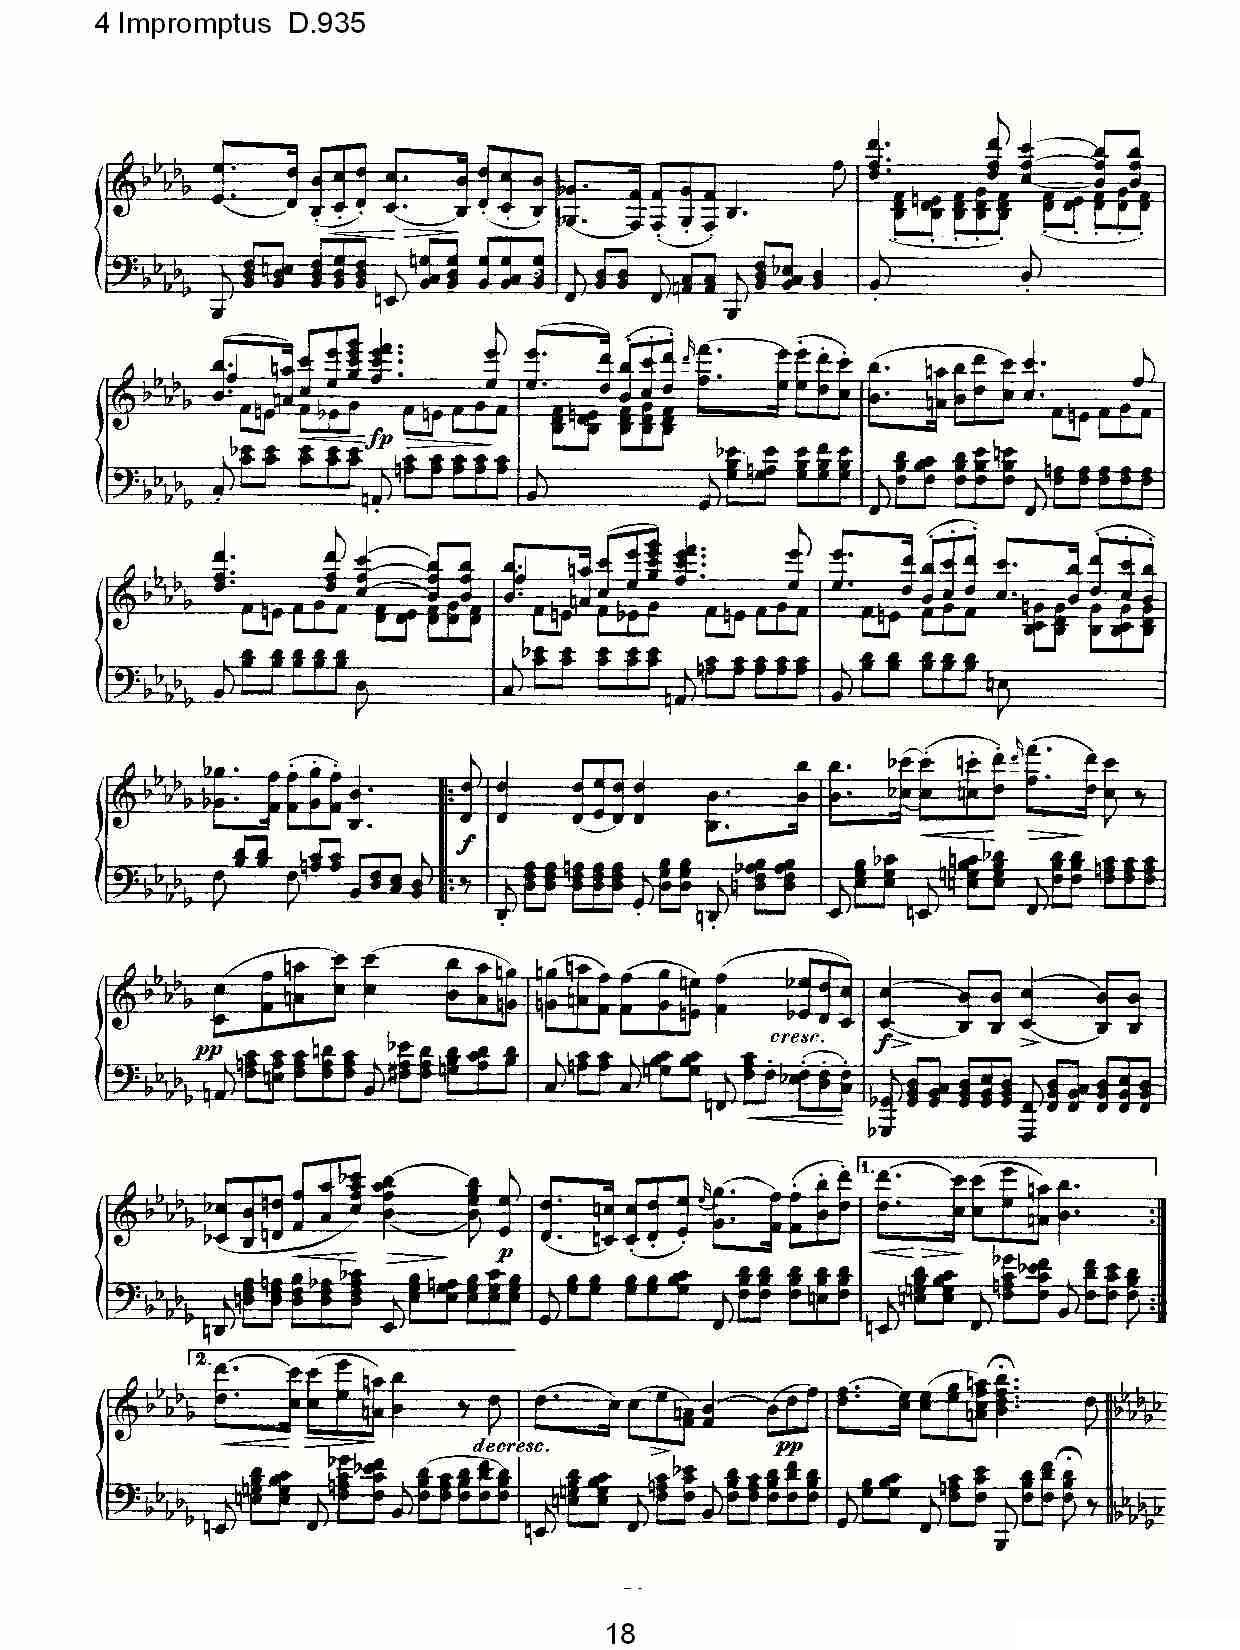 4 Impromptus D.935（4人即兴演奏D.935）钢琴曲谱（图18）